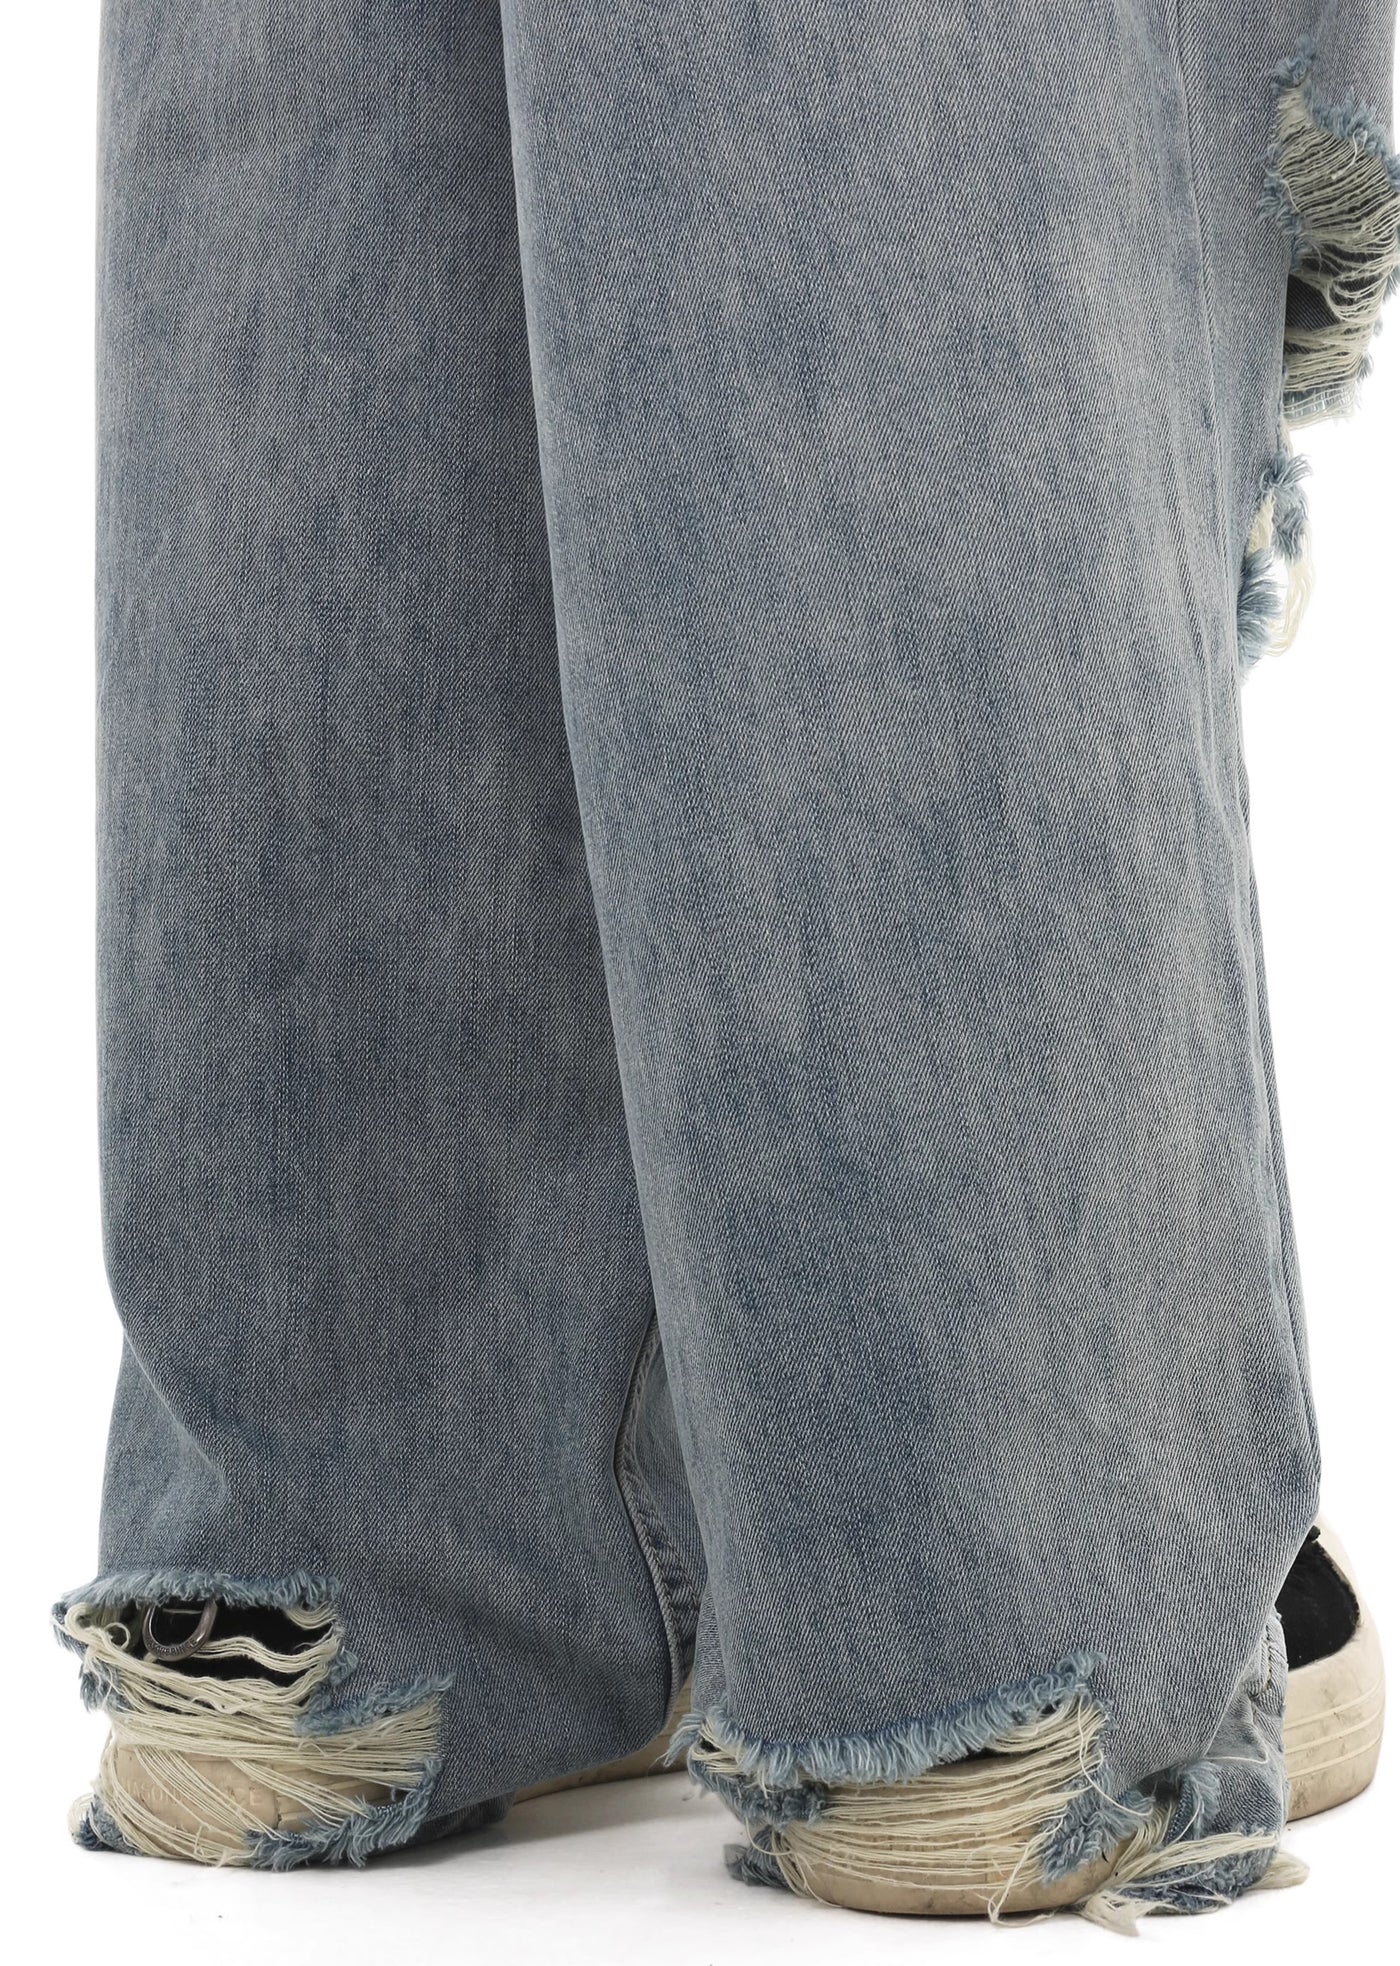 【GIBBYCNA】Navy blue distressed denim pants  GC0011